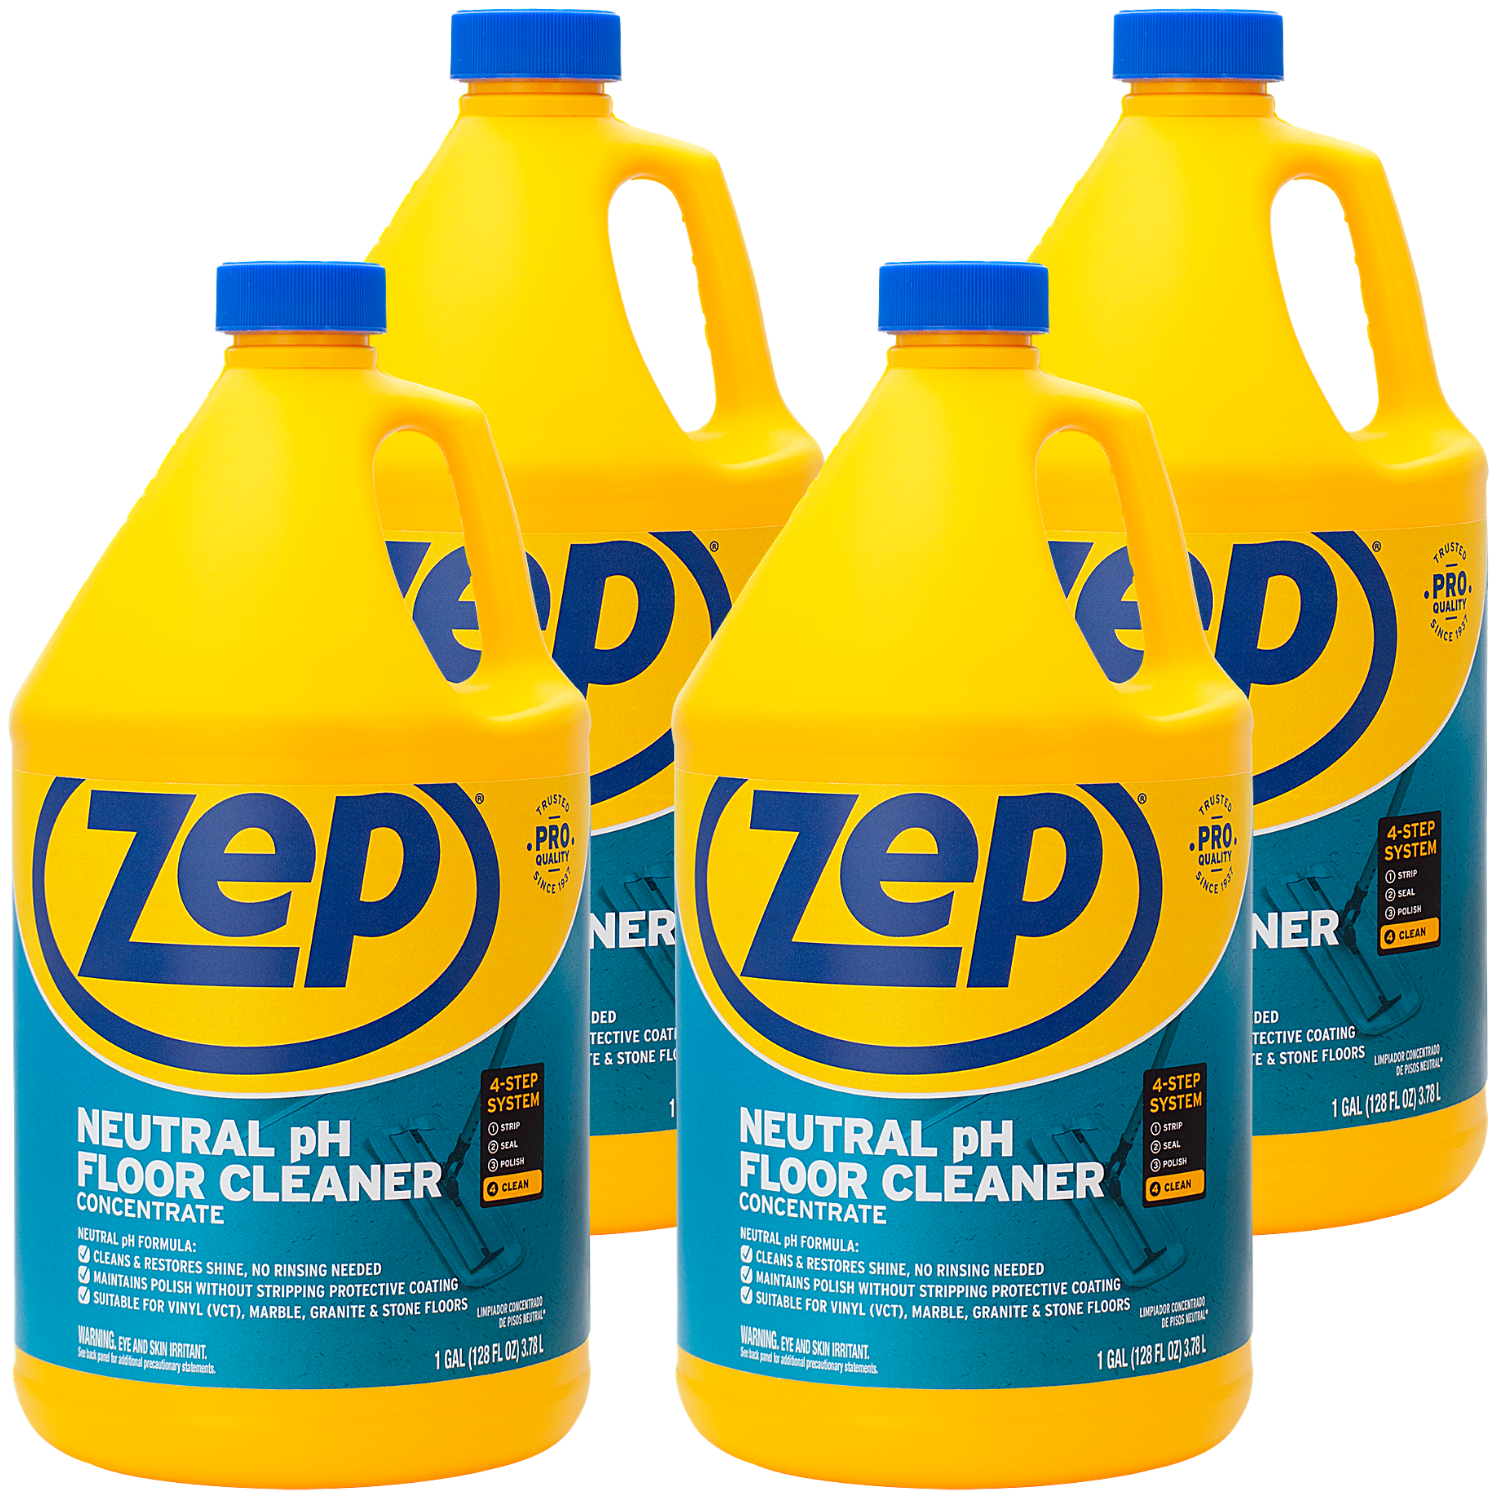 Zep Professional Lemon Furniture Polish, Zep Cleaners, Zep Lubricants, Zep Degreasers, Zep Hand Cleaner